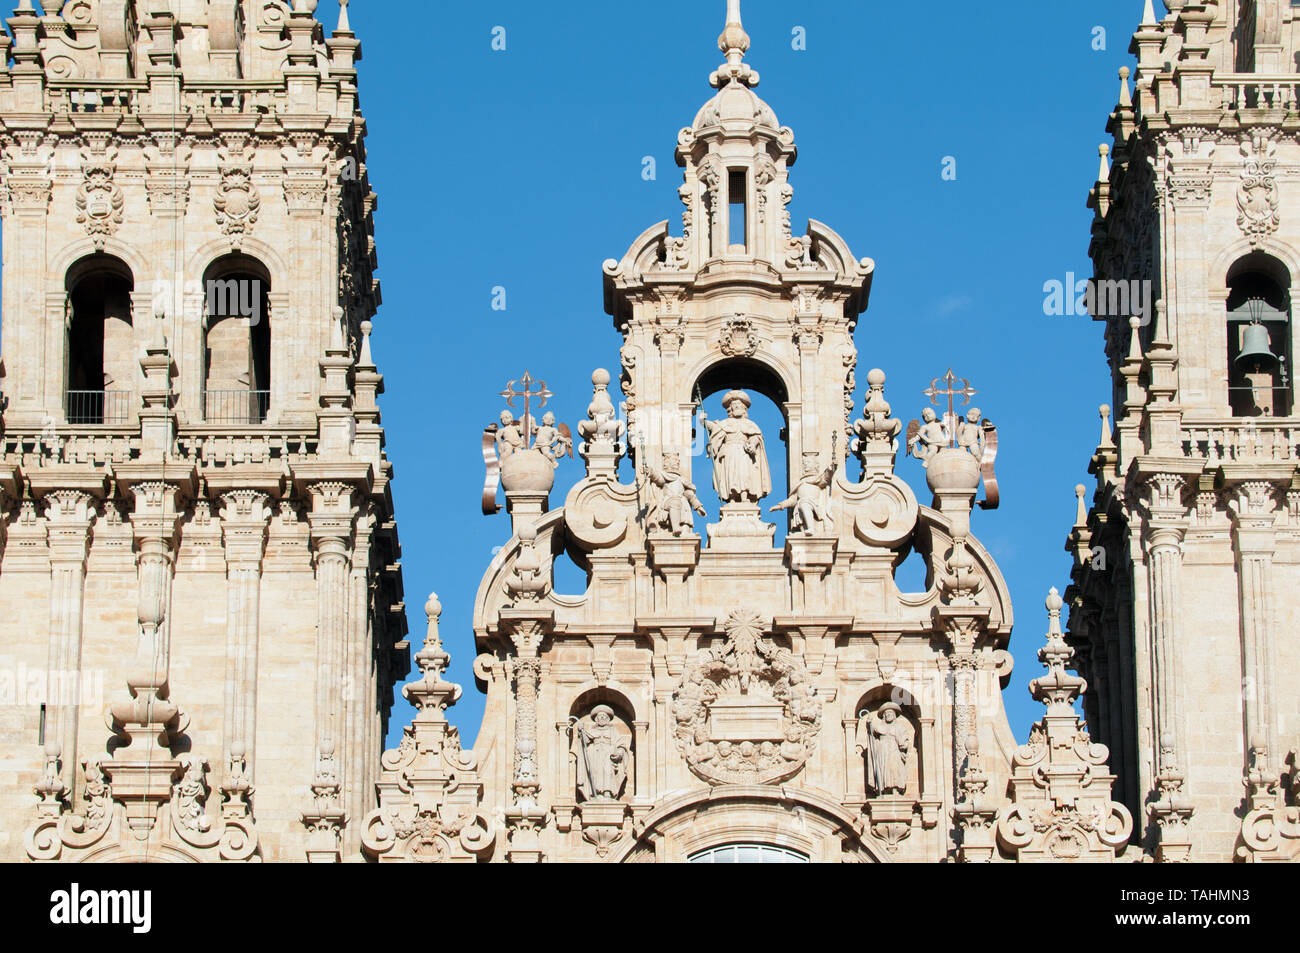 Way of St. James, Cathedral of Santiago, Praza do Obradoiro, Santiago de Compostela Spain. Stock Photo